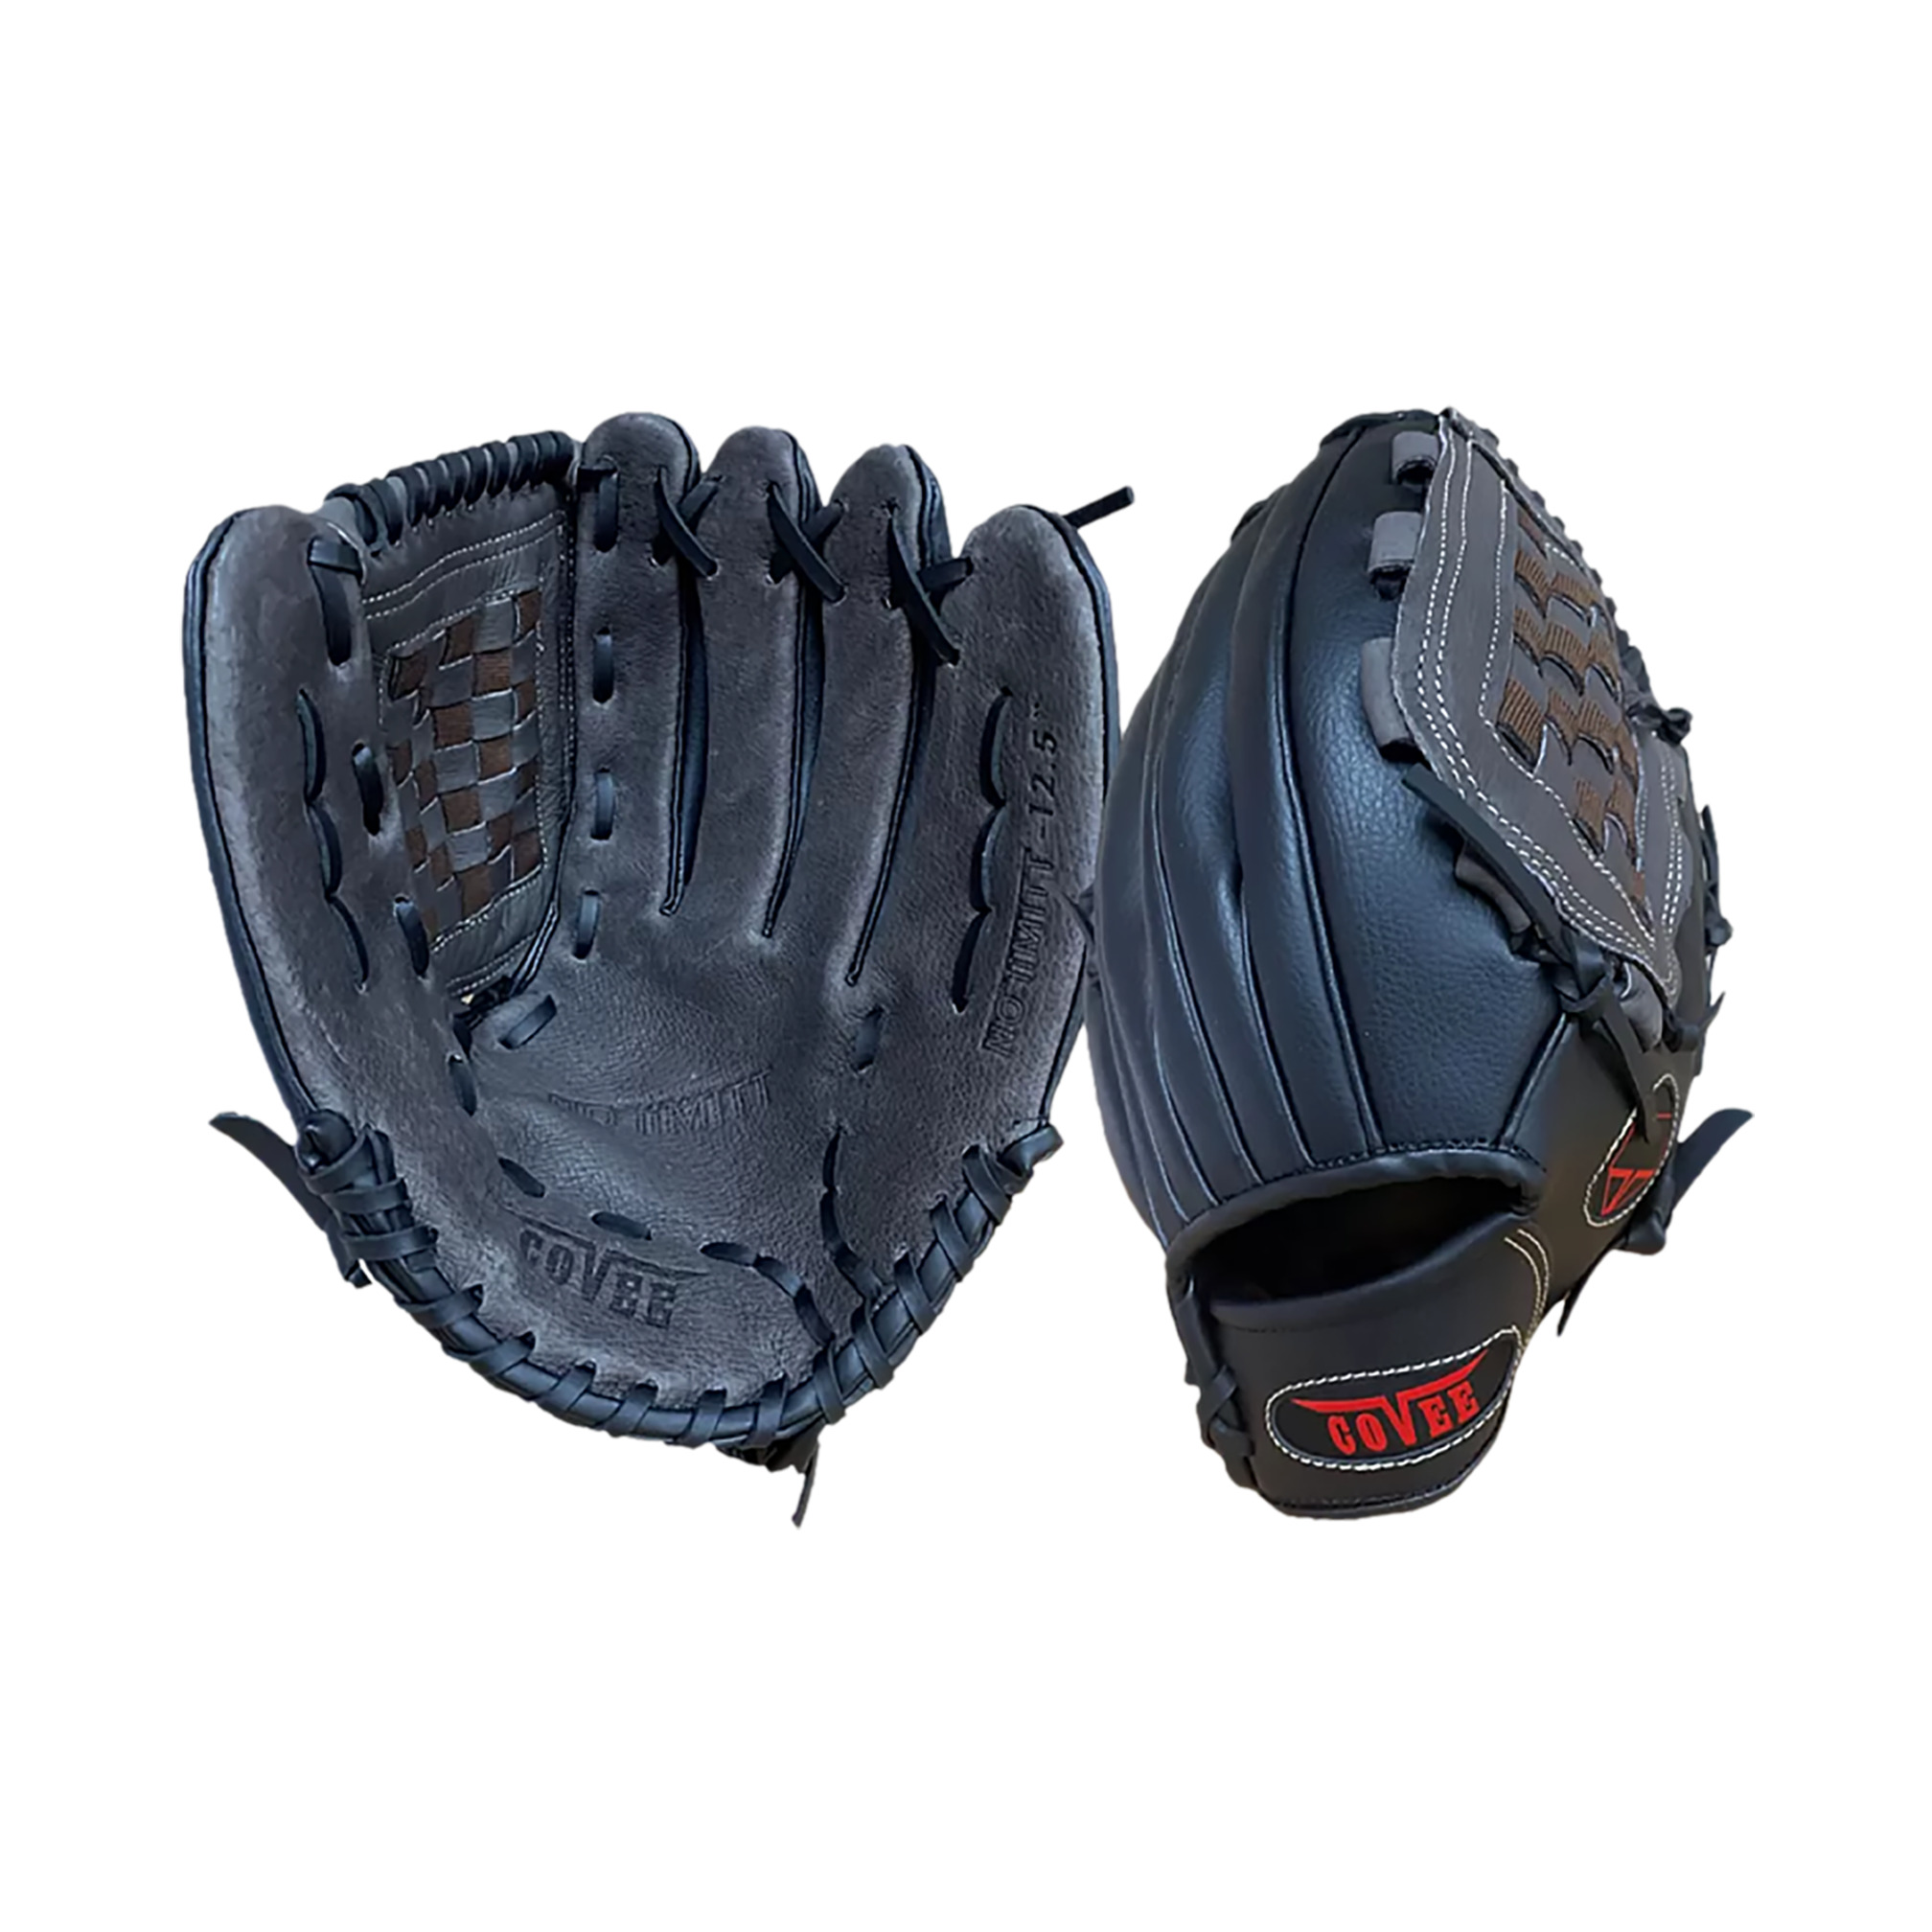 Baseball glove, left catcher, 11 inch